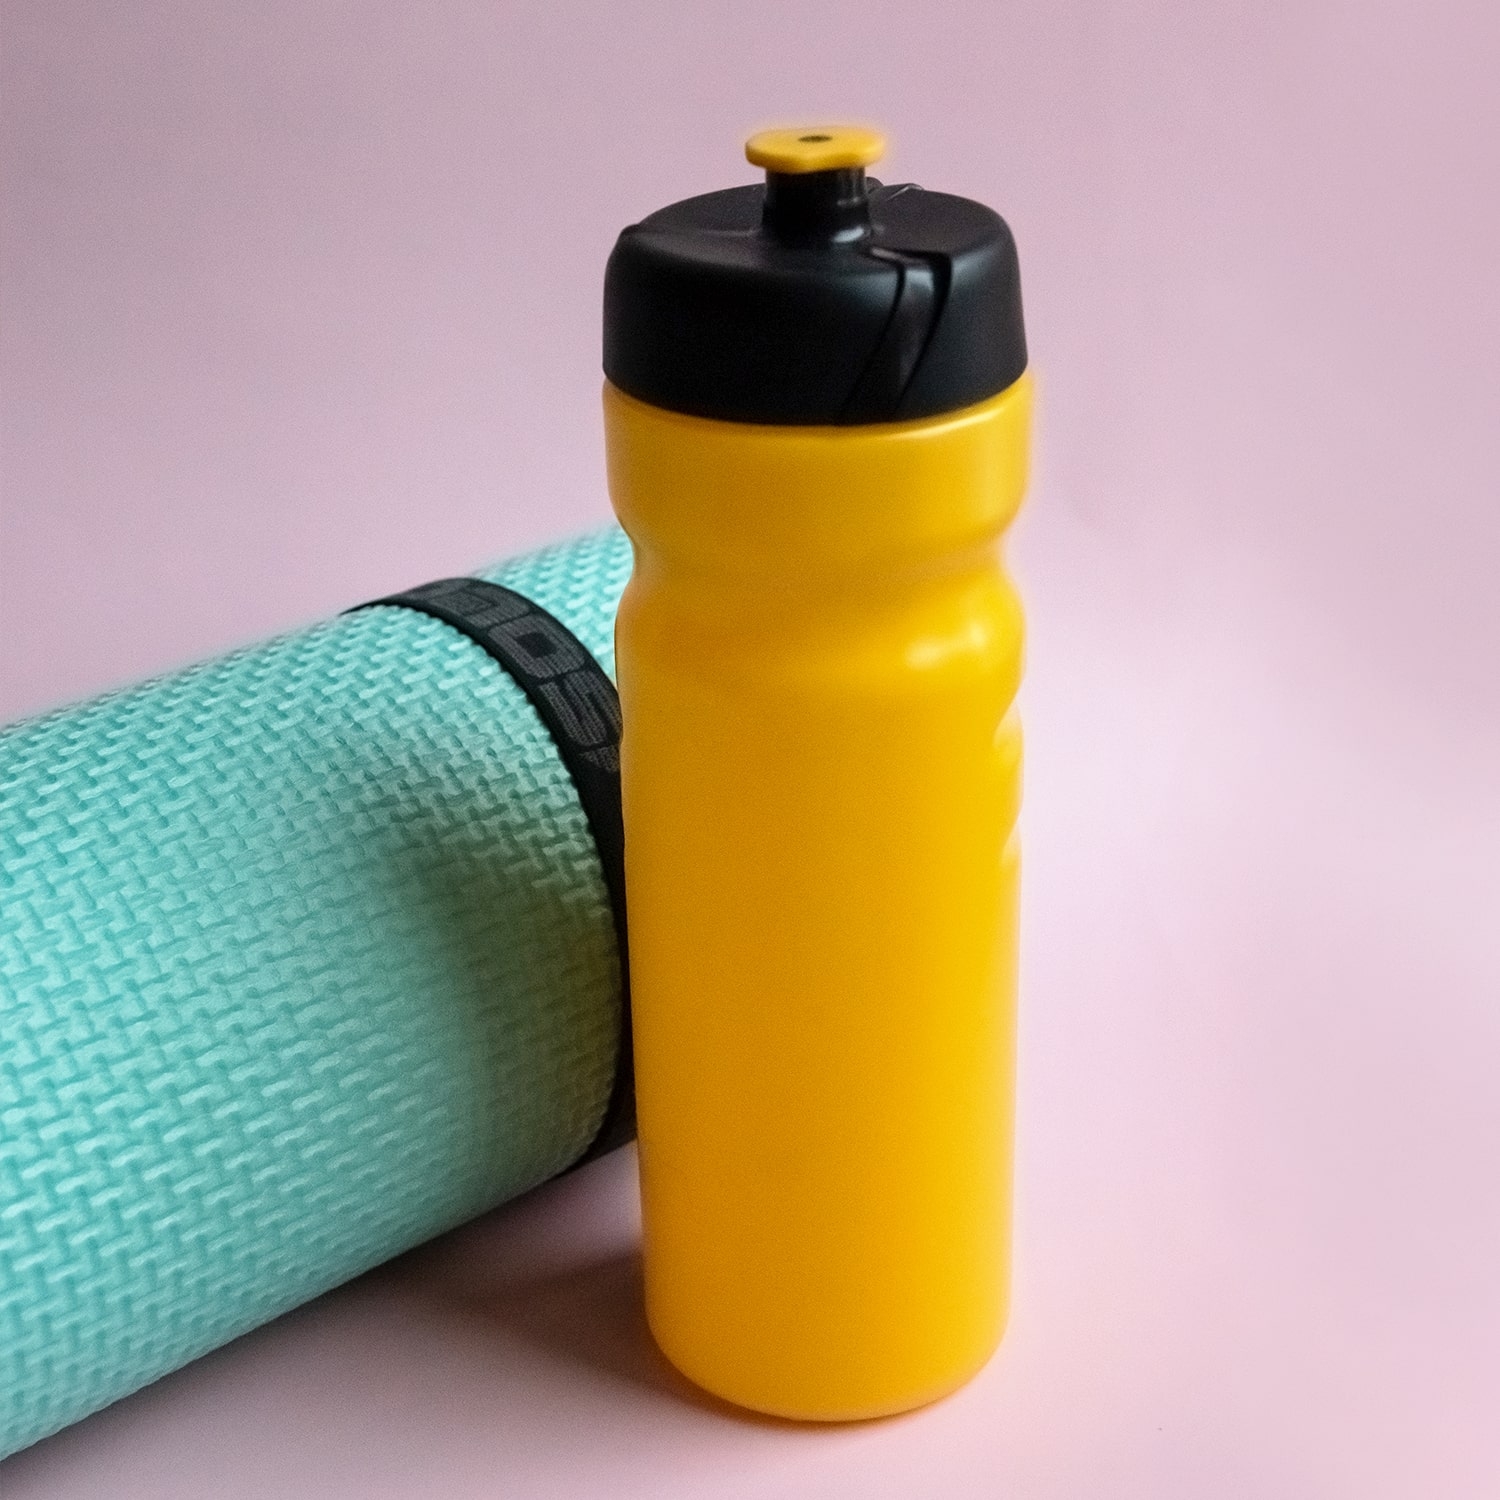 Бутылка для напитков Active Blue line, 750 мл (желтая), желтый, пластик